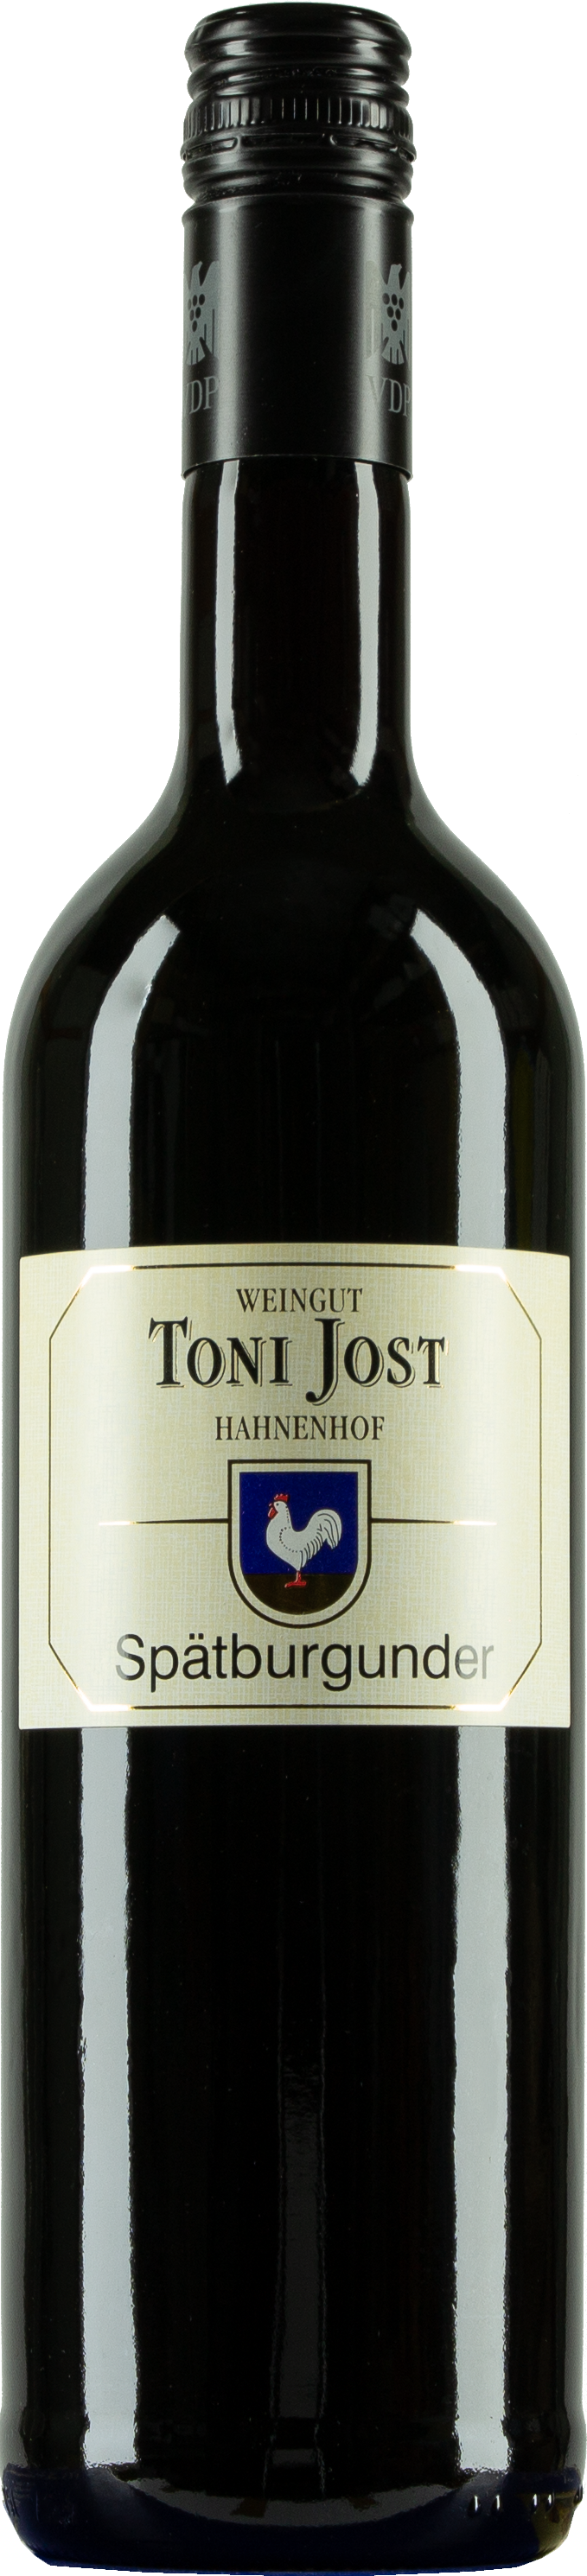 2016 Toni Jost Spätburgunder Qualitätswein 0.75l